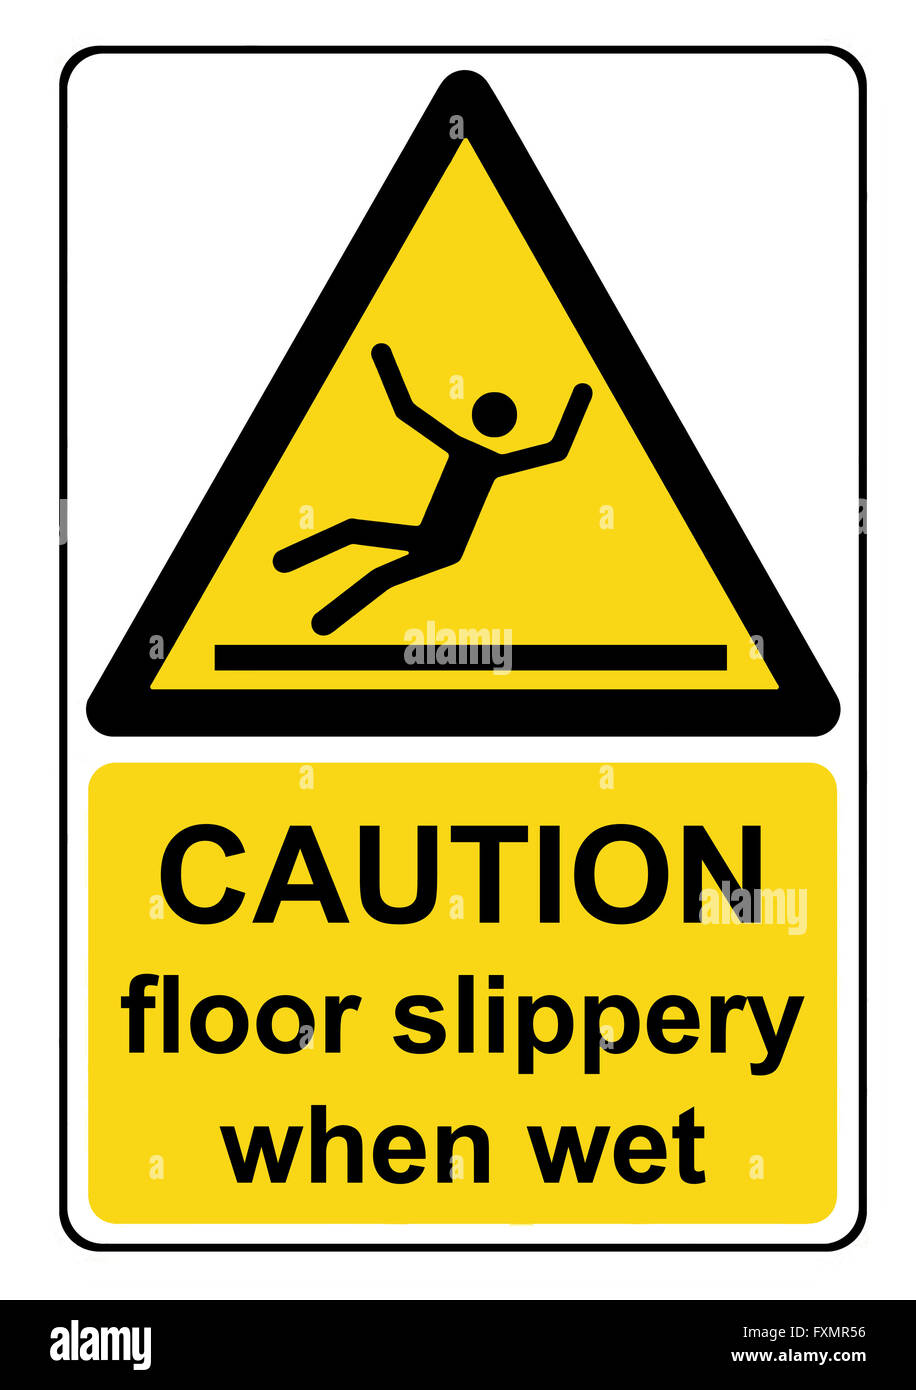 Caution floor slippery when wet yellow warning sign Stock Photo